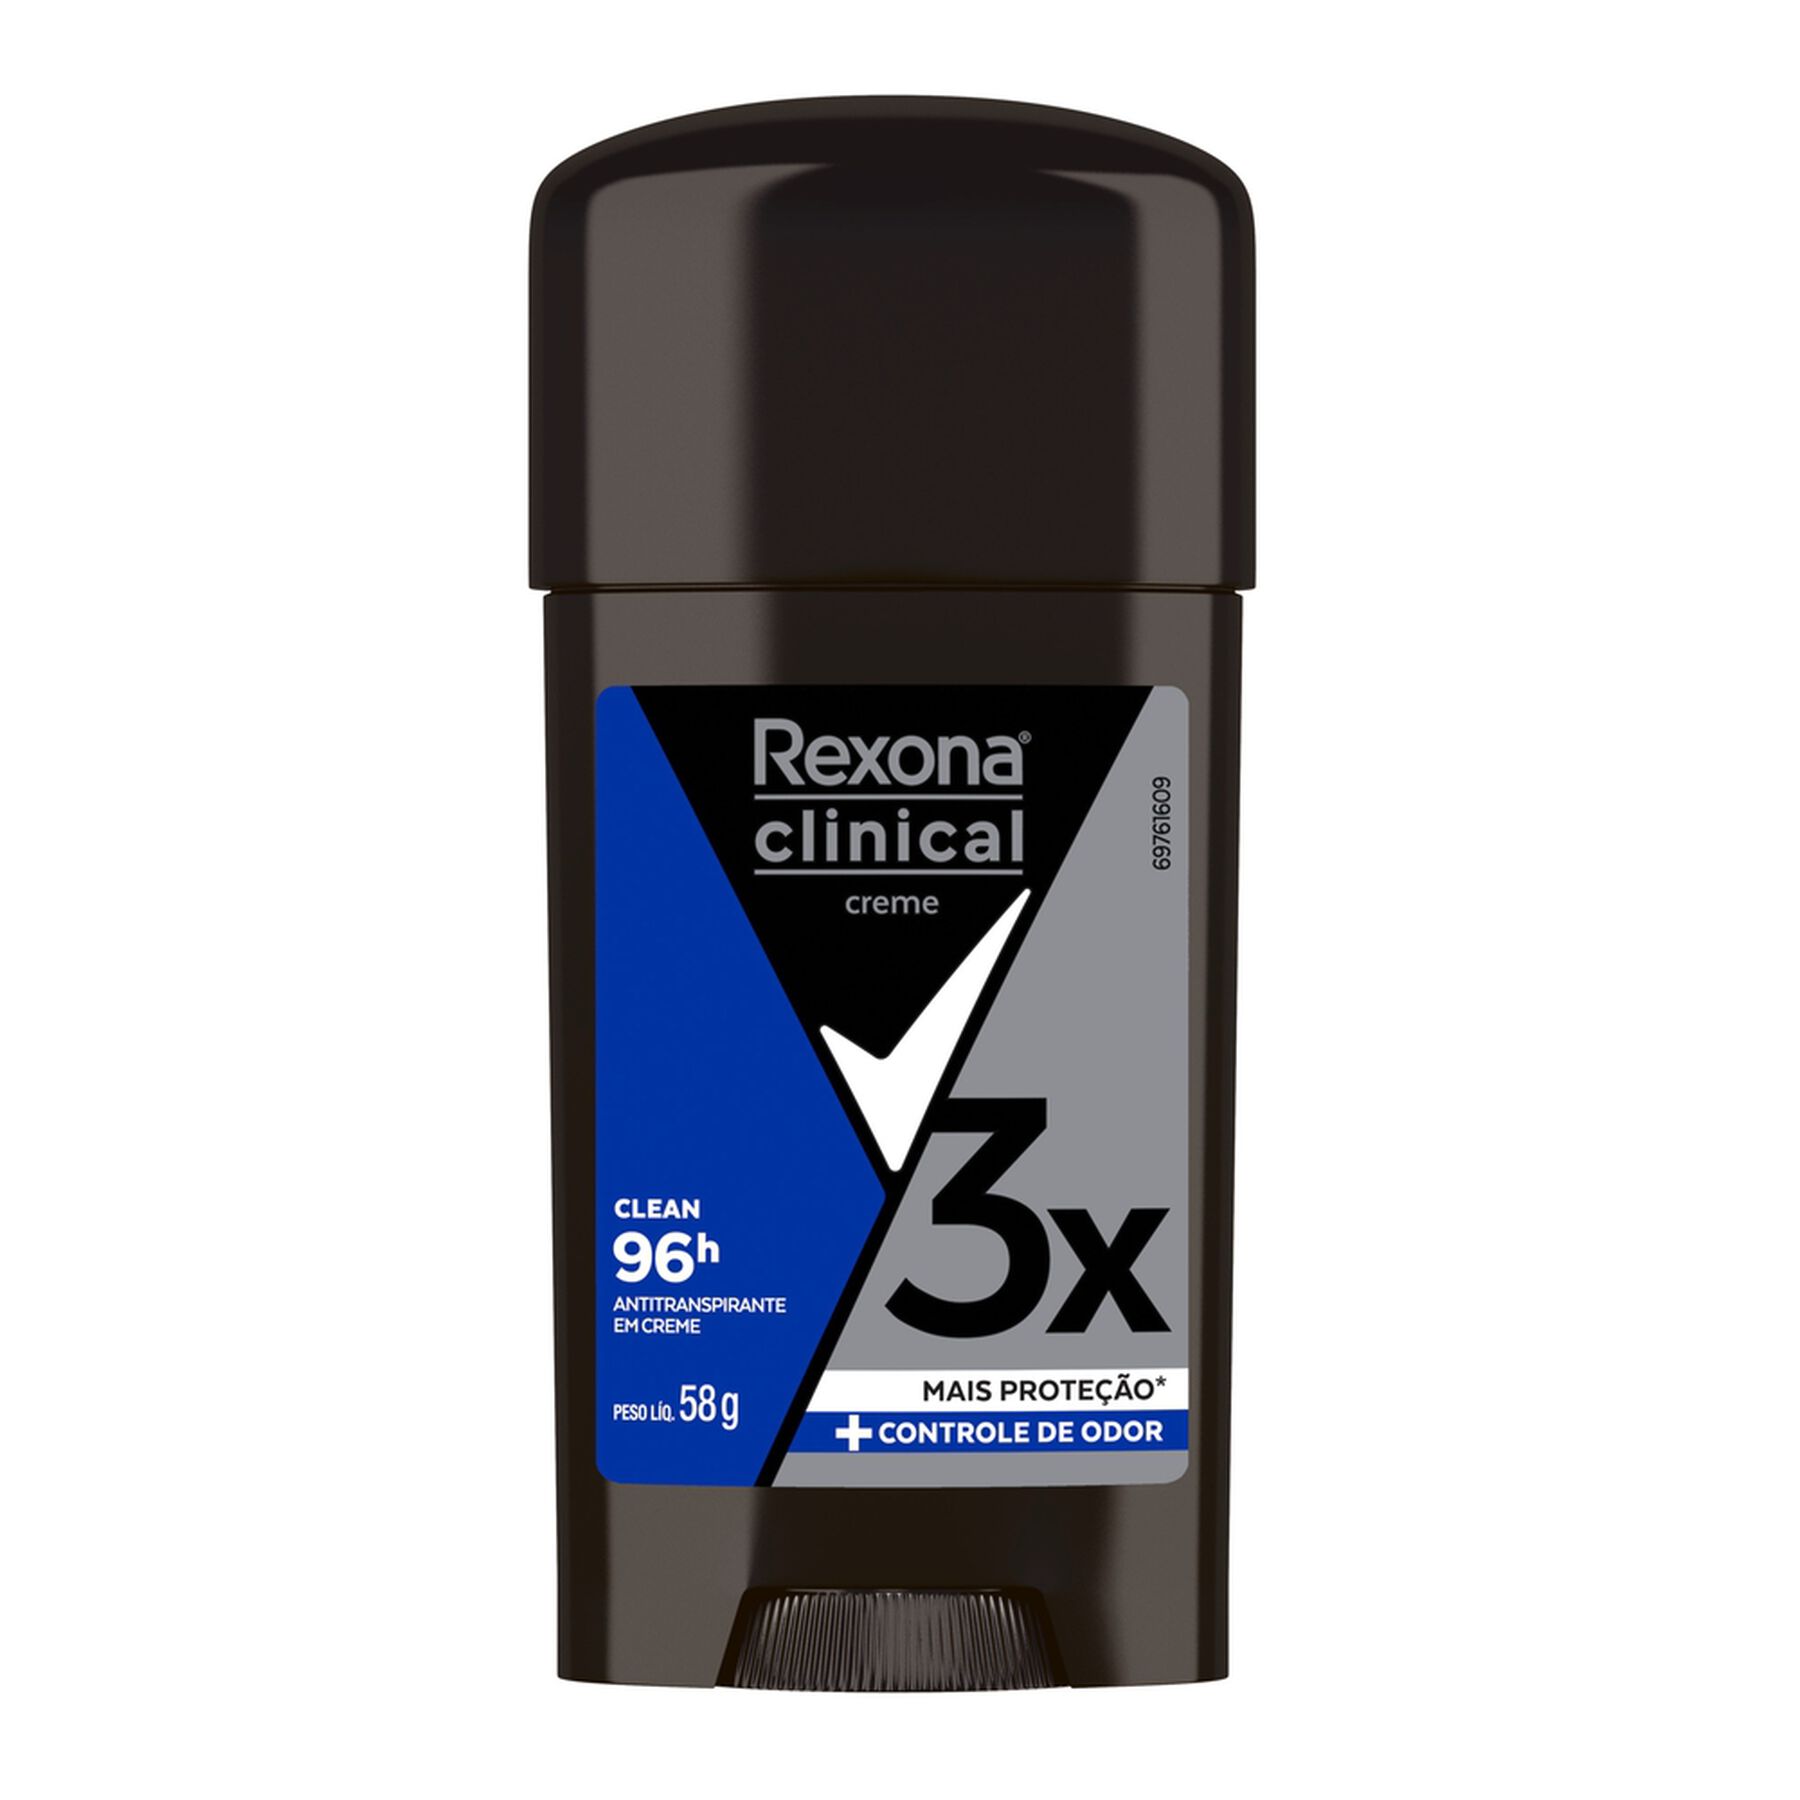 Antitranspirante em Creme Clean 96h Rexona Clinical 58g